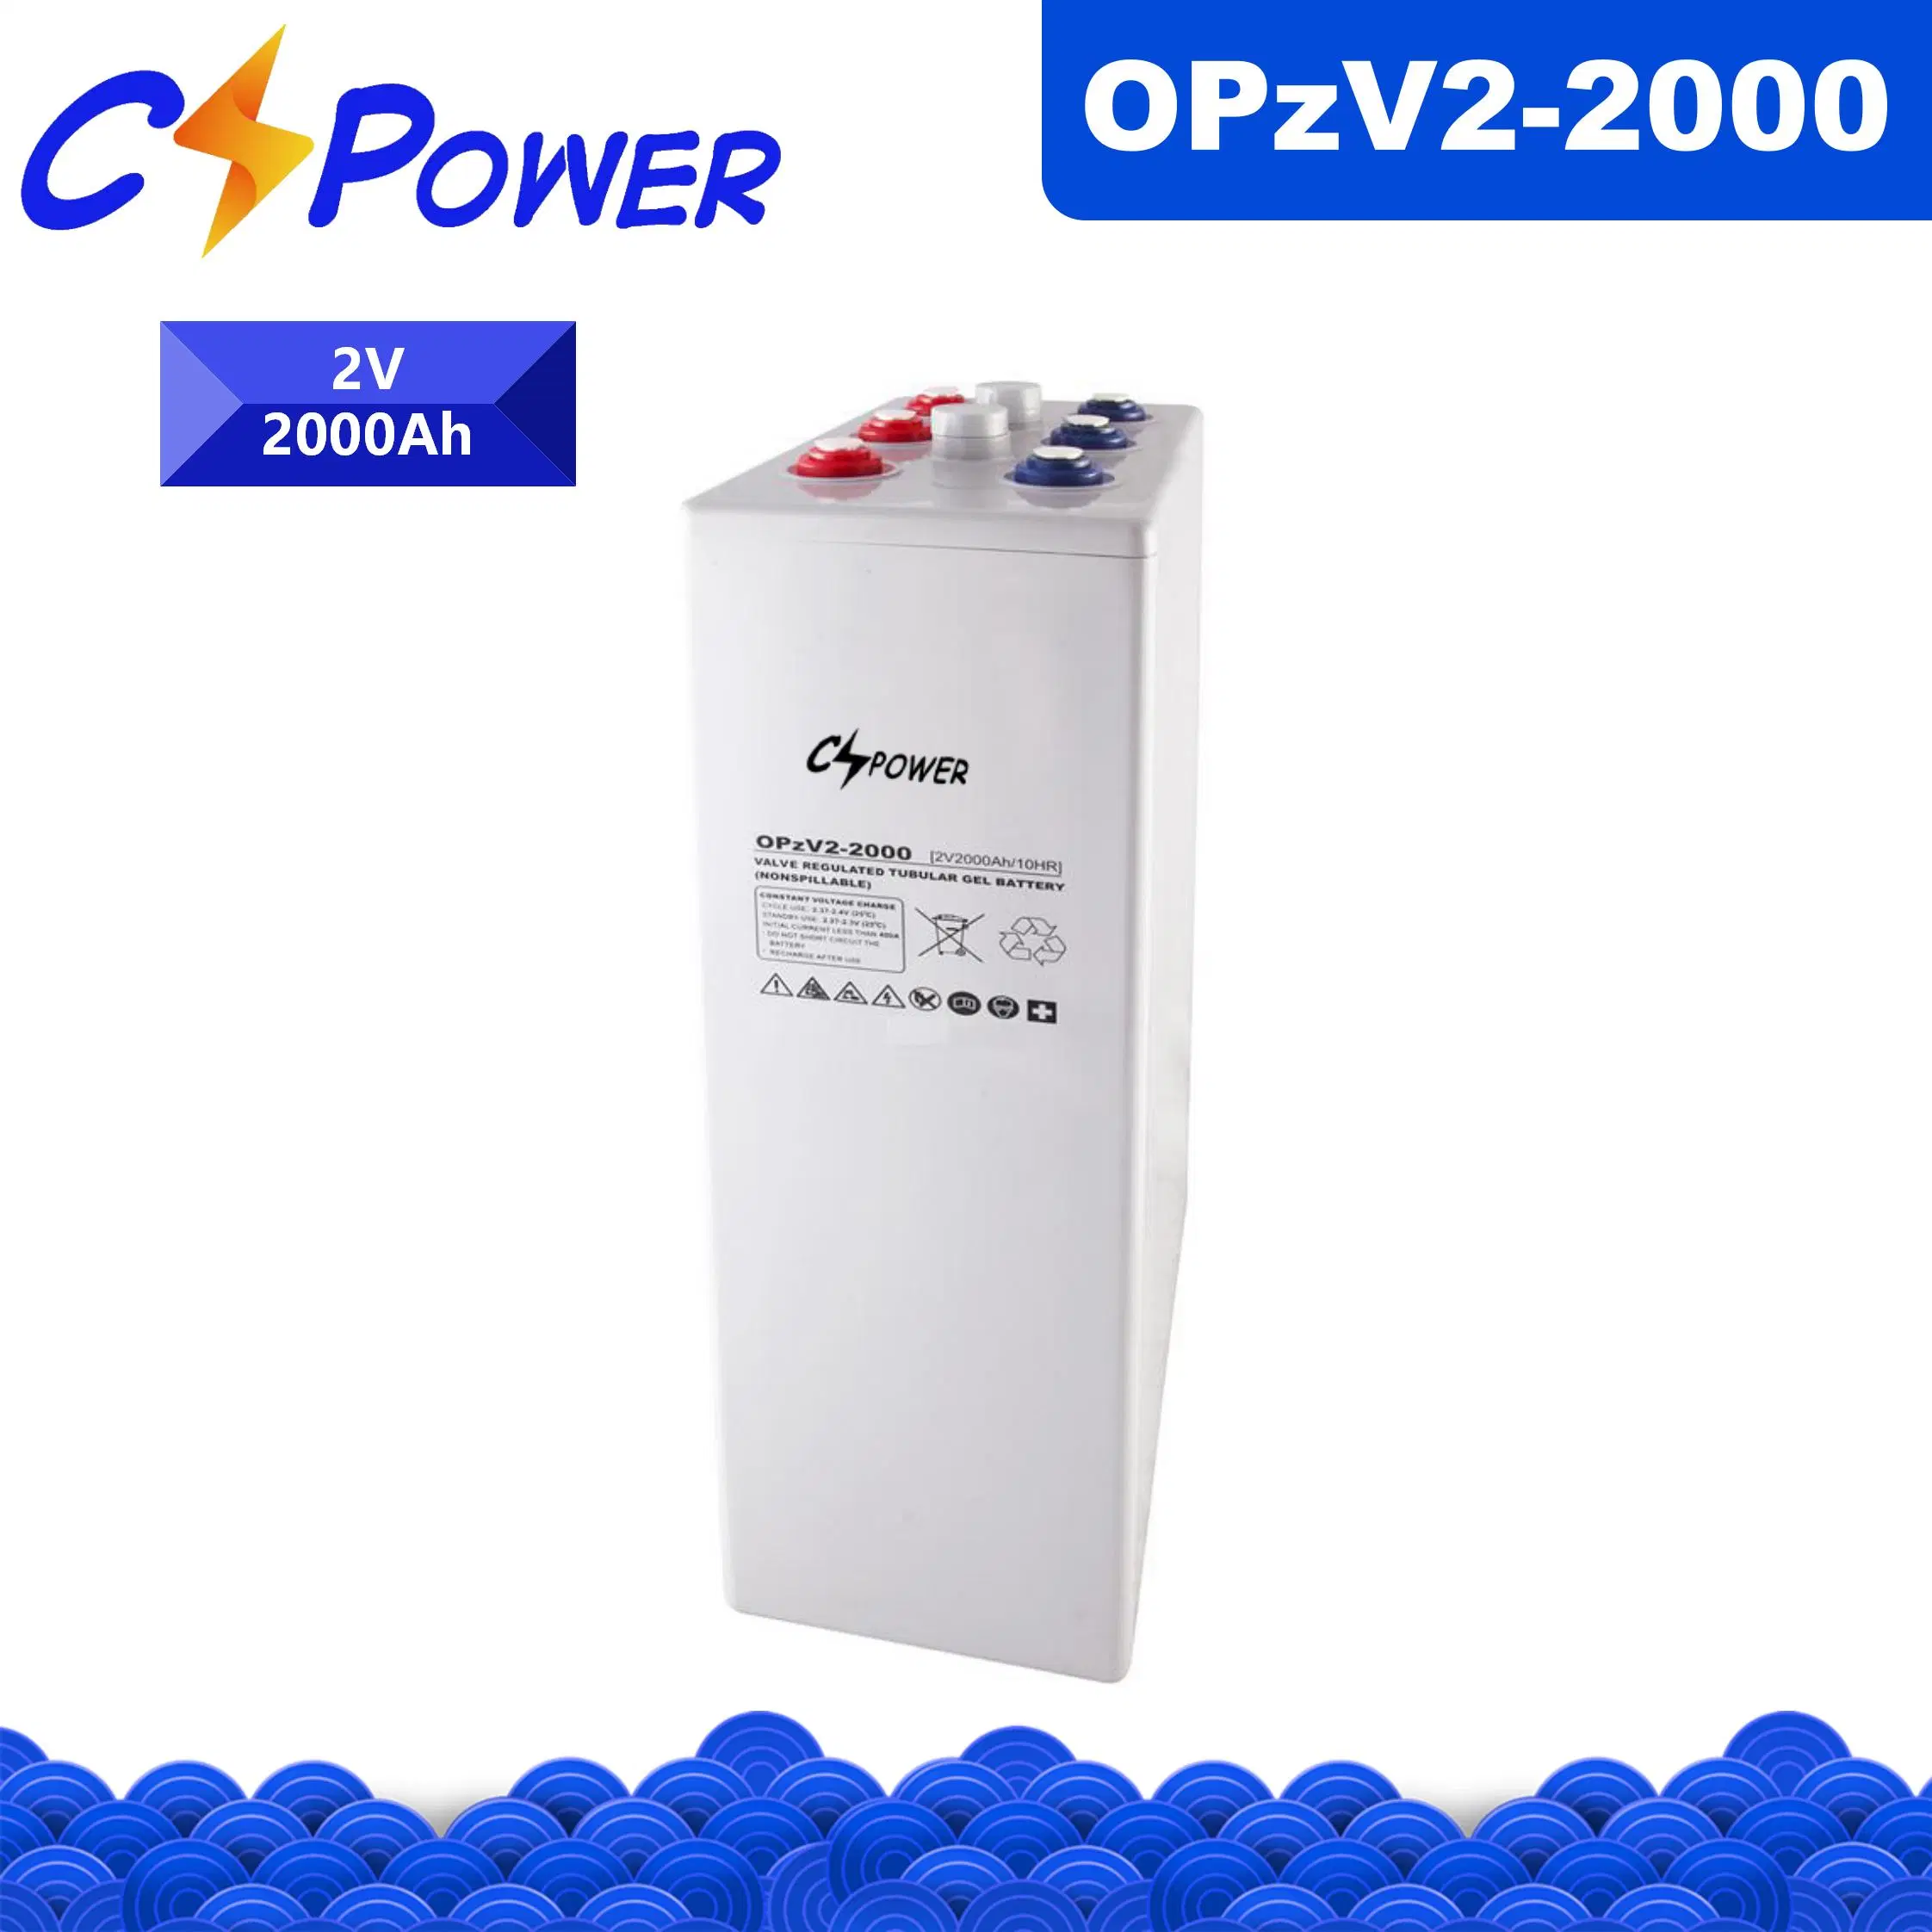 Cspower Opzv-Gel-Tubular-Battery/Opzv-Solar-Power-Battery 2V 2000ah for Telecom/Solar System Power